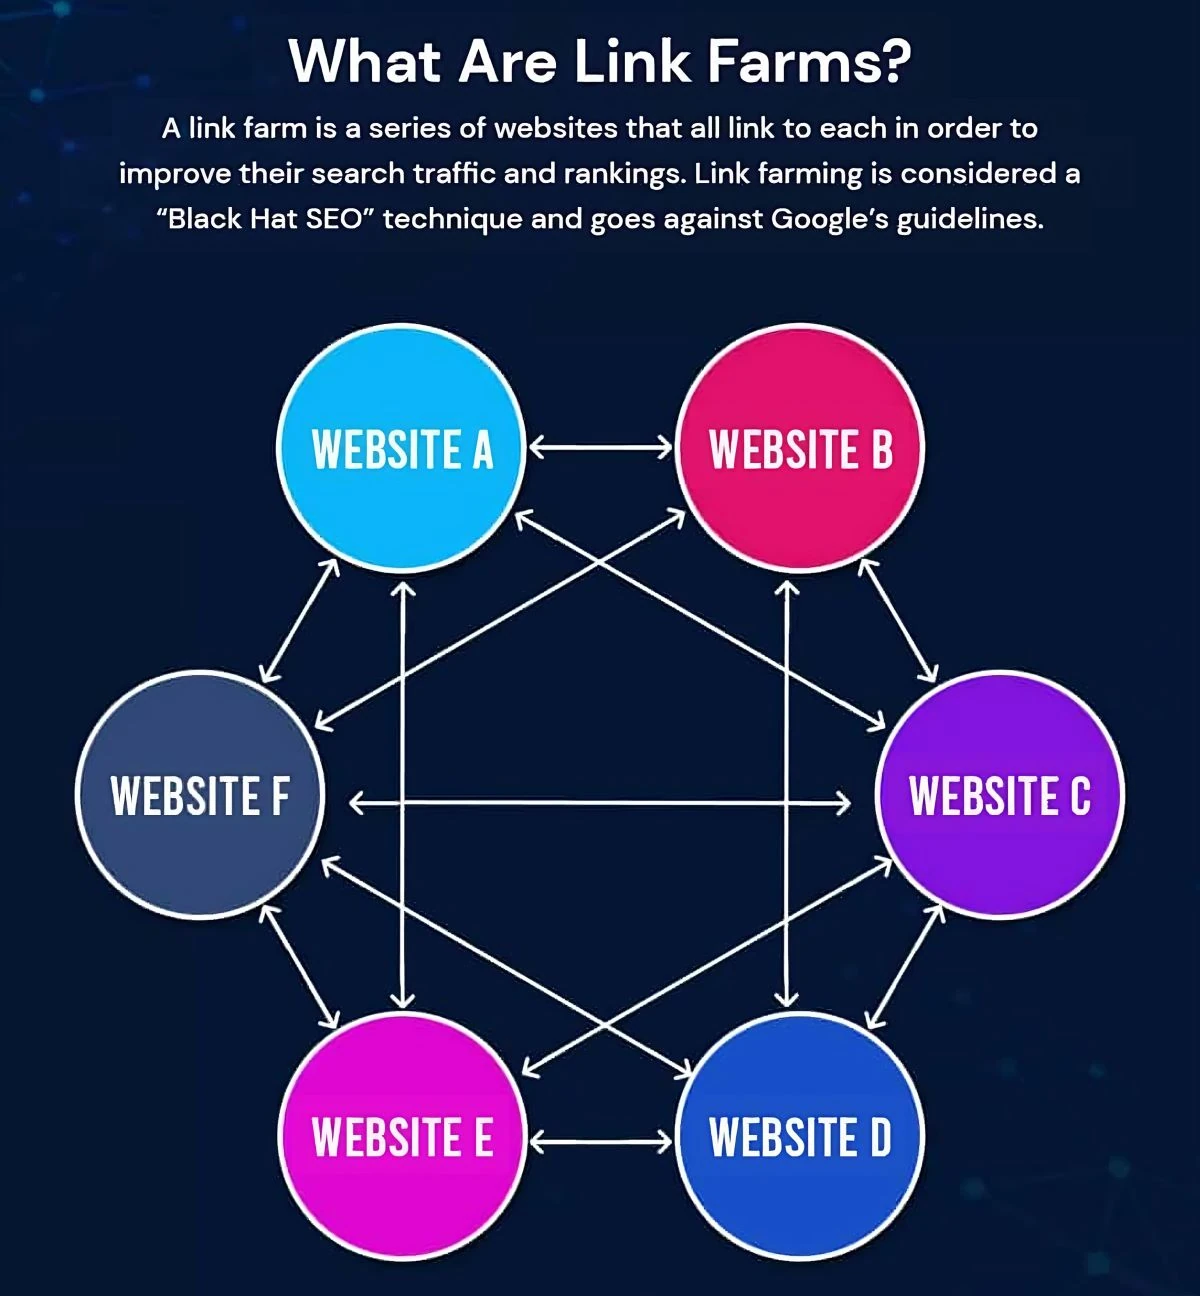 Website sinh ra bằng kỹ thuật Link Farm